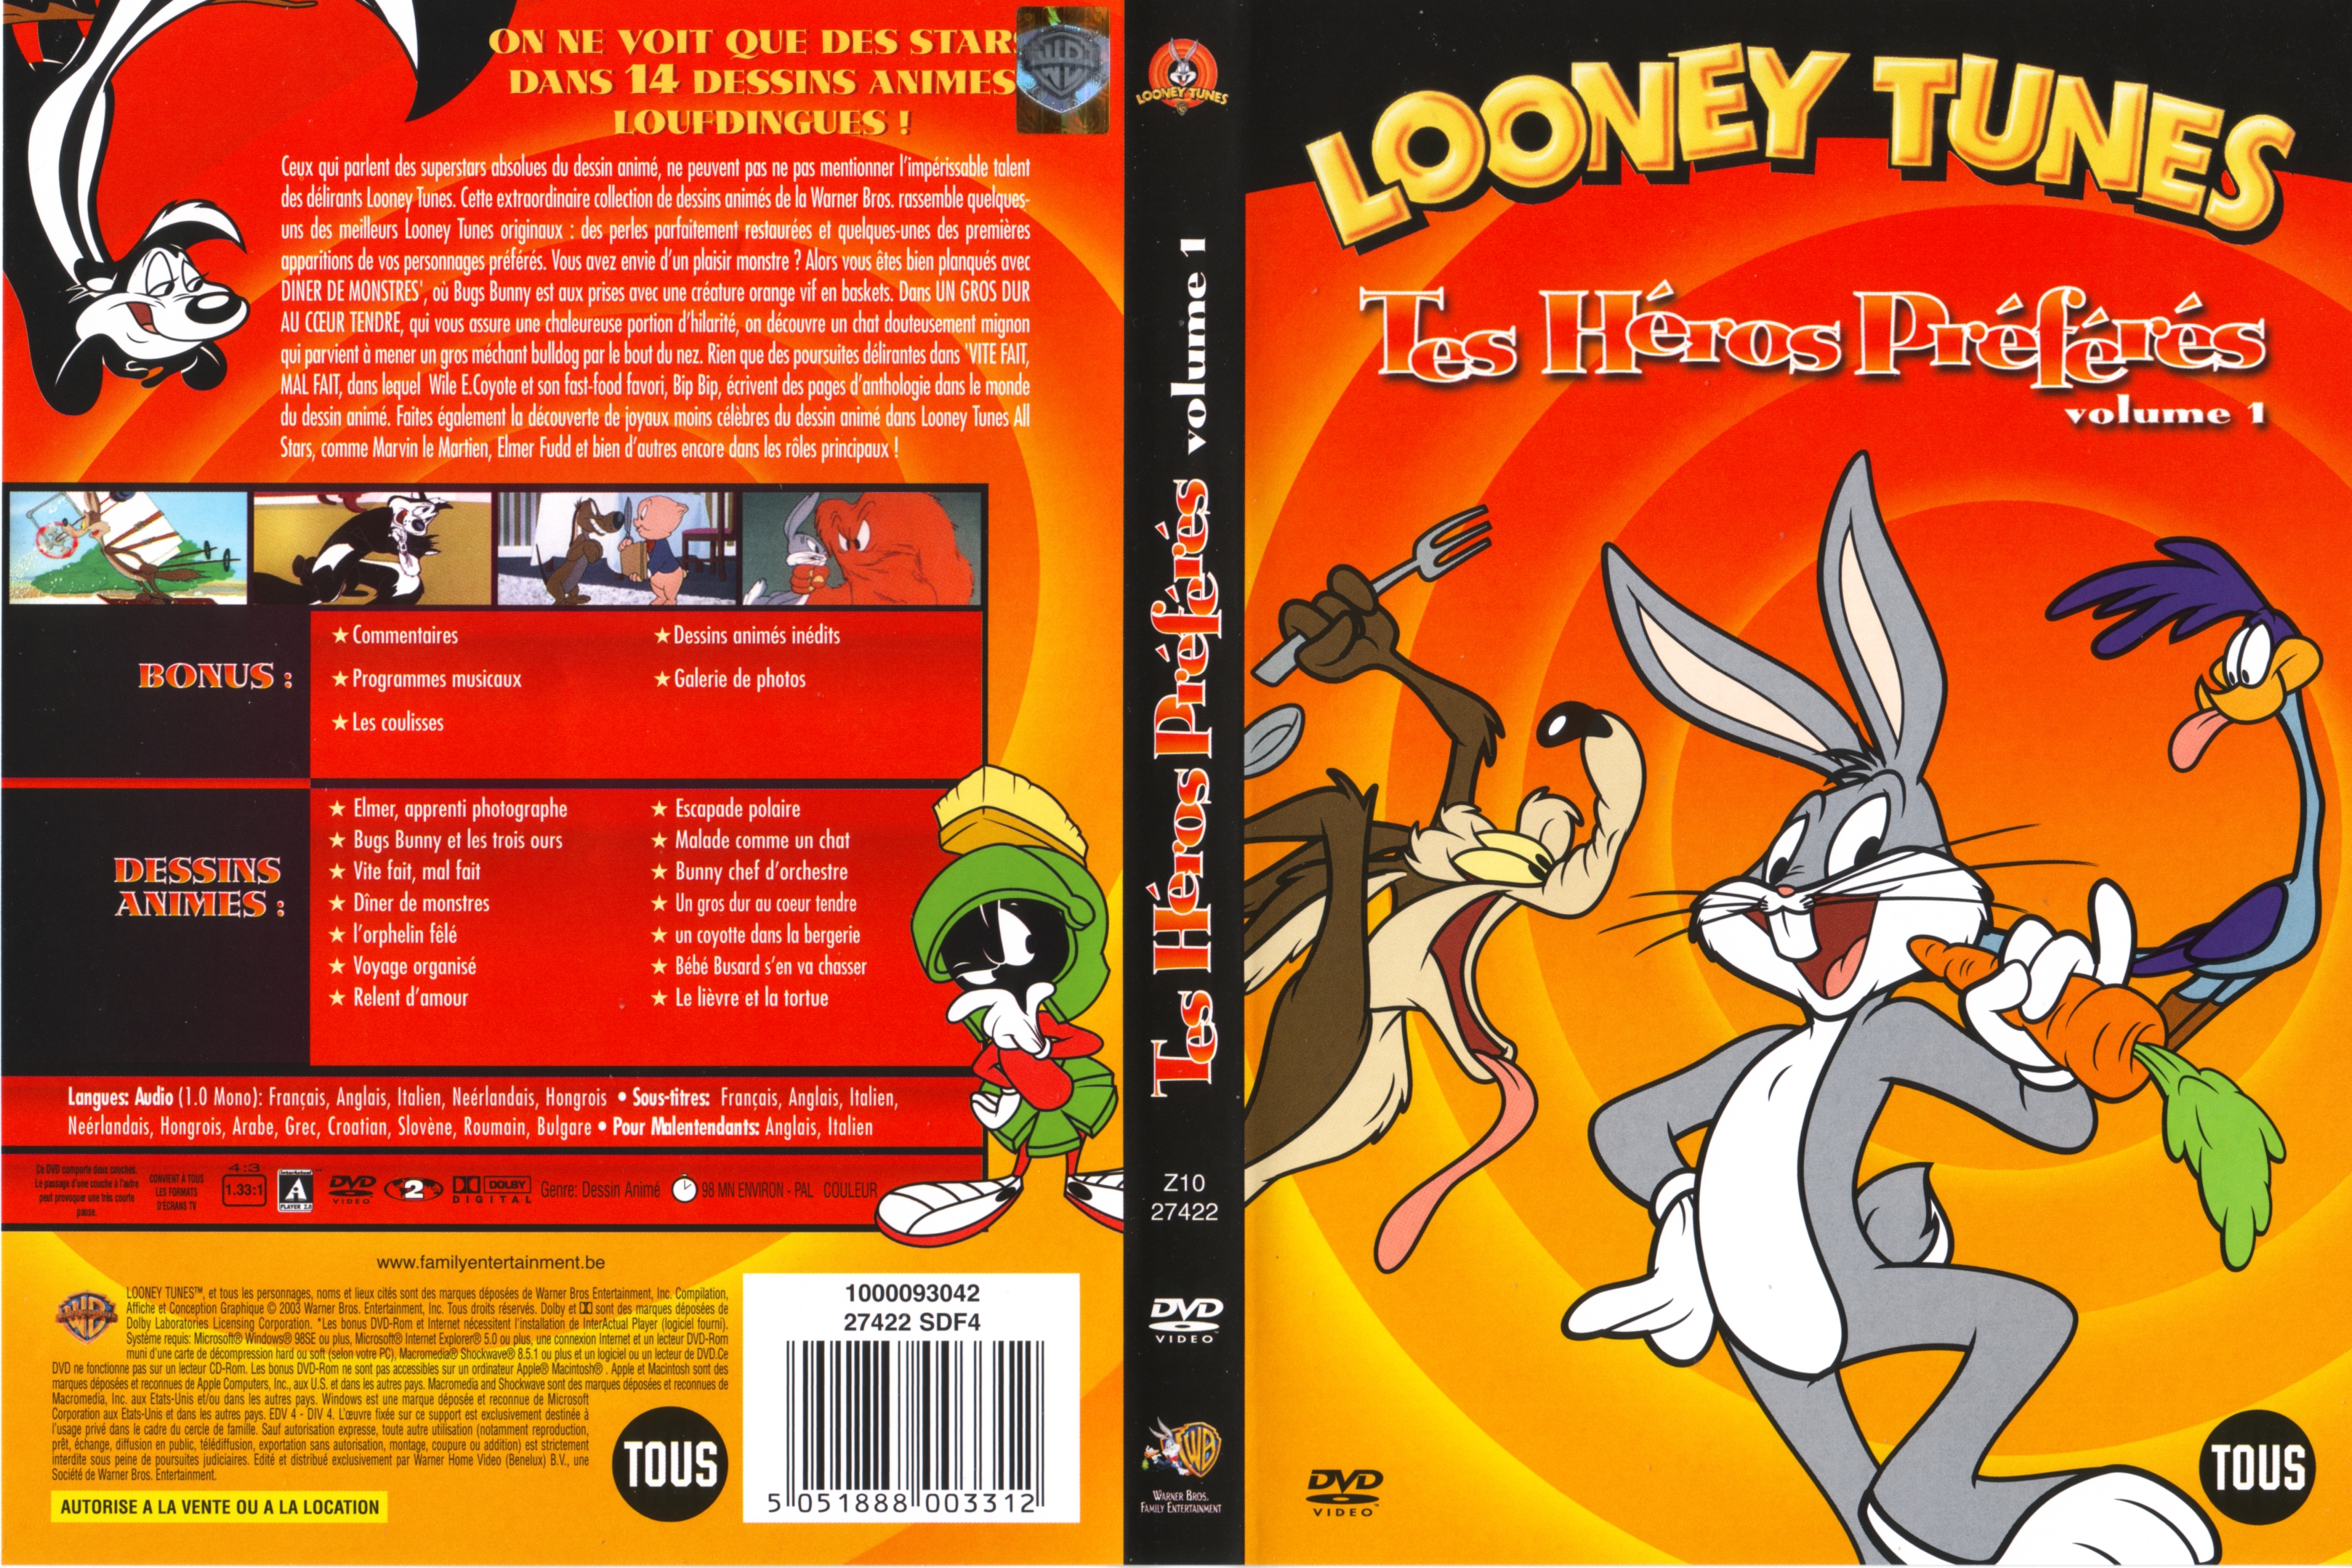 Jaquette DVD Looney Tunes - Tes heros preferes vol 1